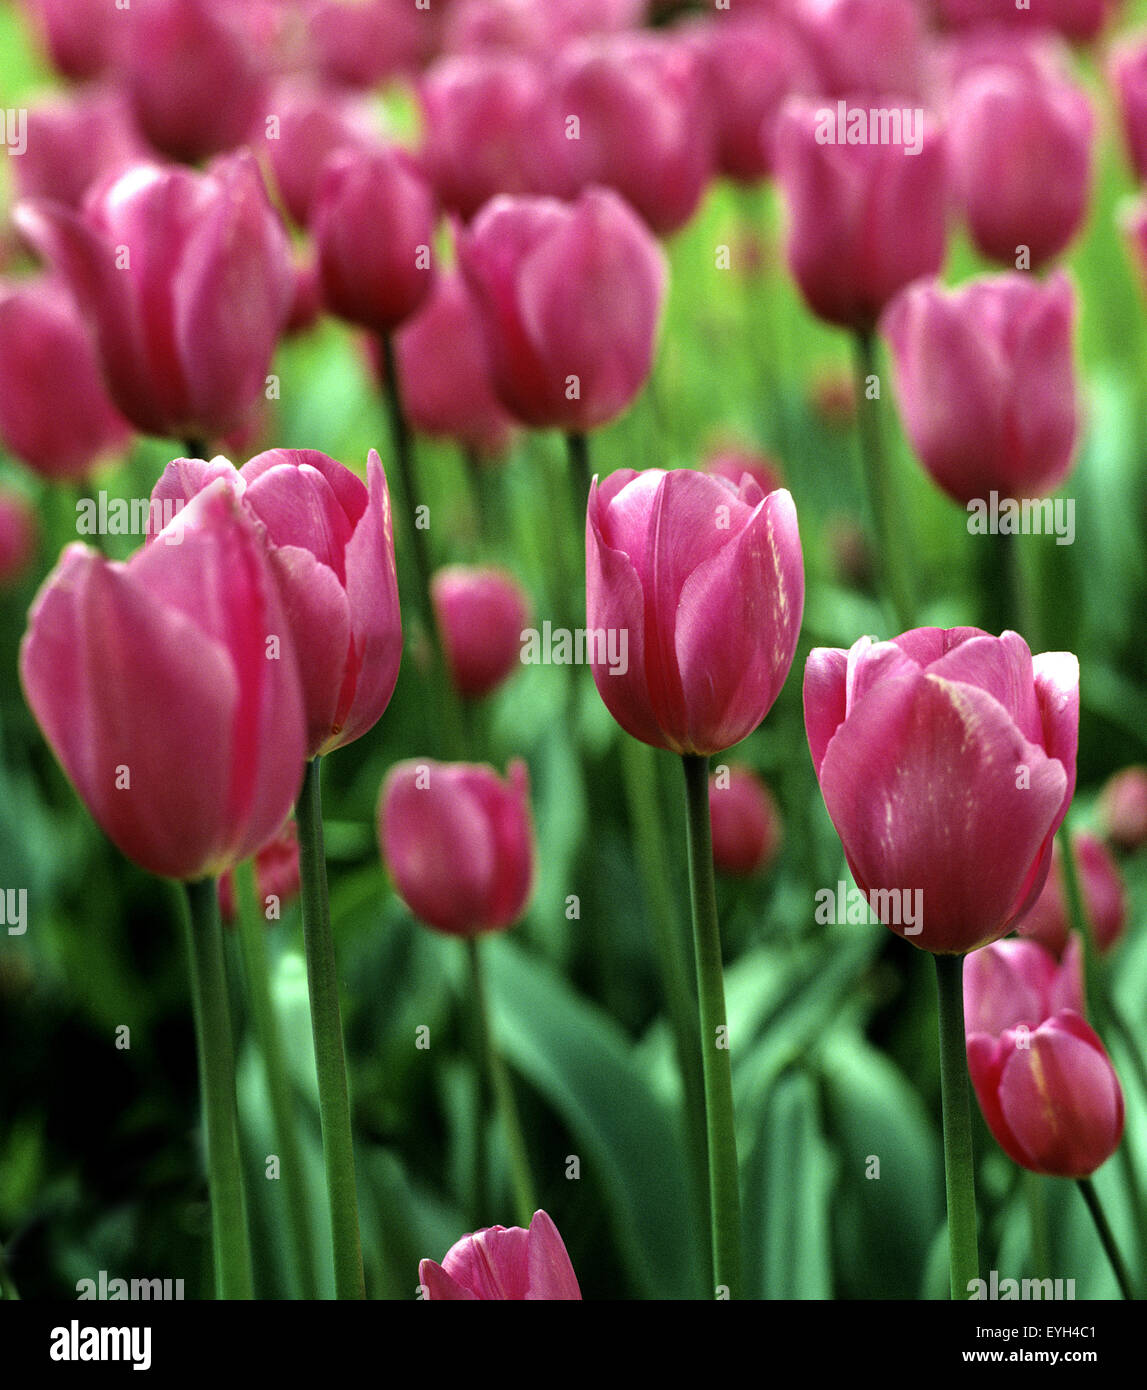 Triumpf-Tulpe, Tulipa, Zwiebelgewächs, Frühjahrsblume, Blume, Gartenpflanze, Triumpf Tulpe, Don Quichotte, Tulpen, Tulpe, Zwiebe Stock Photo